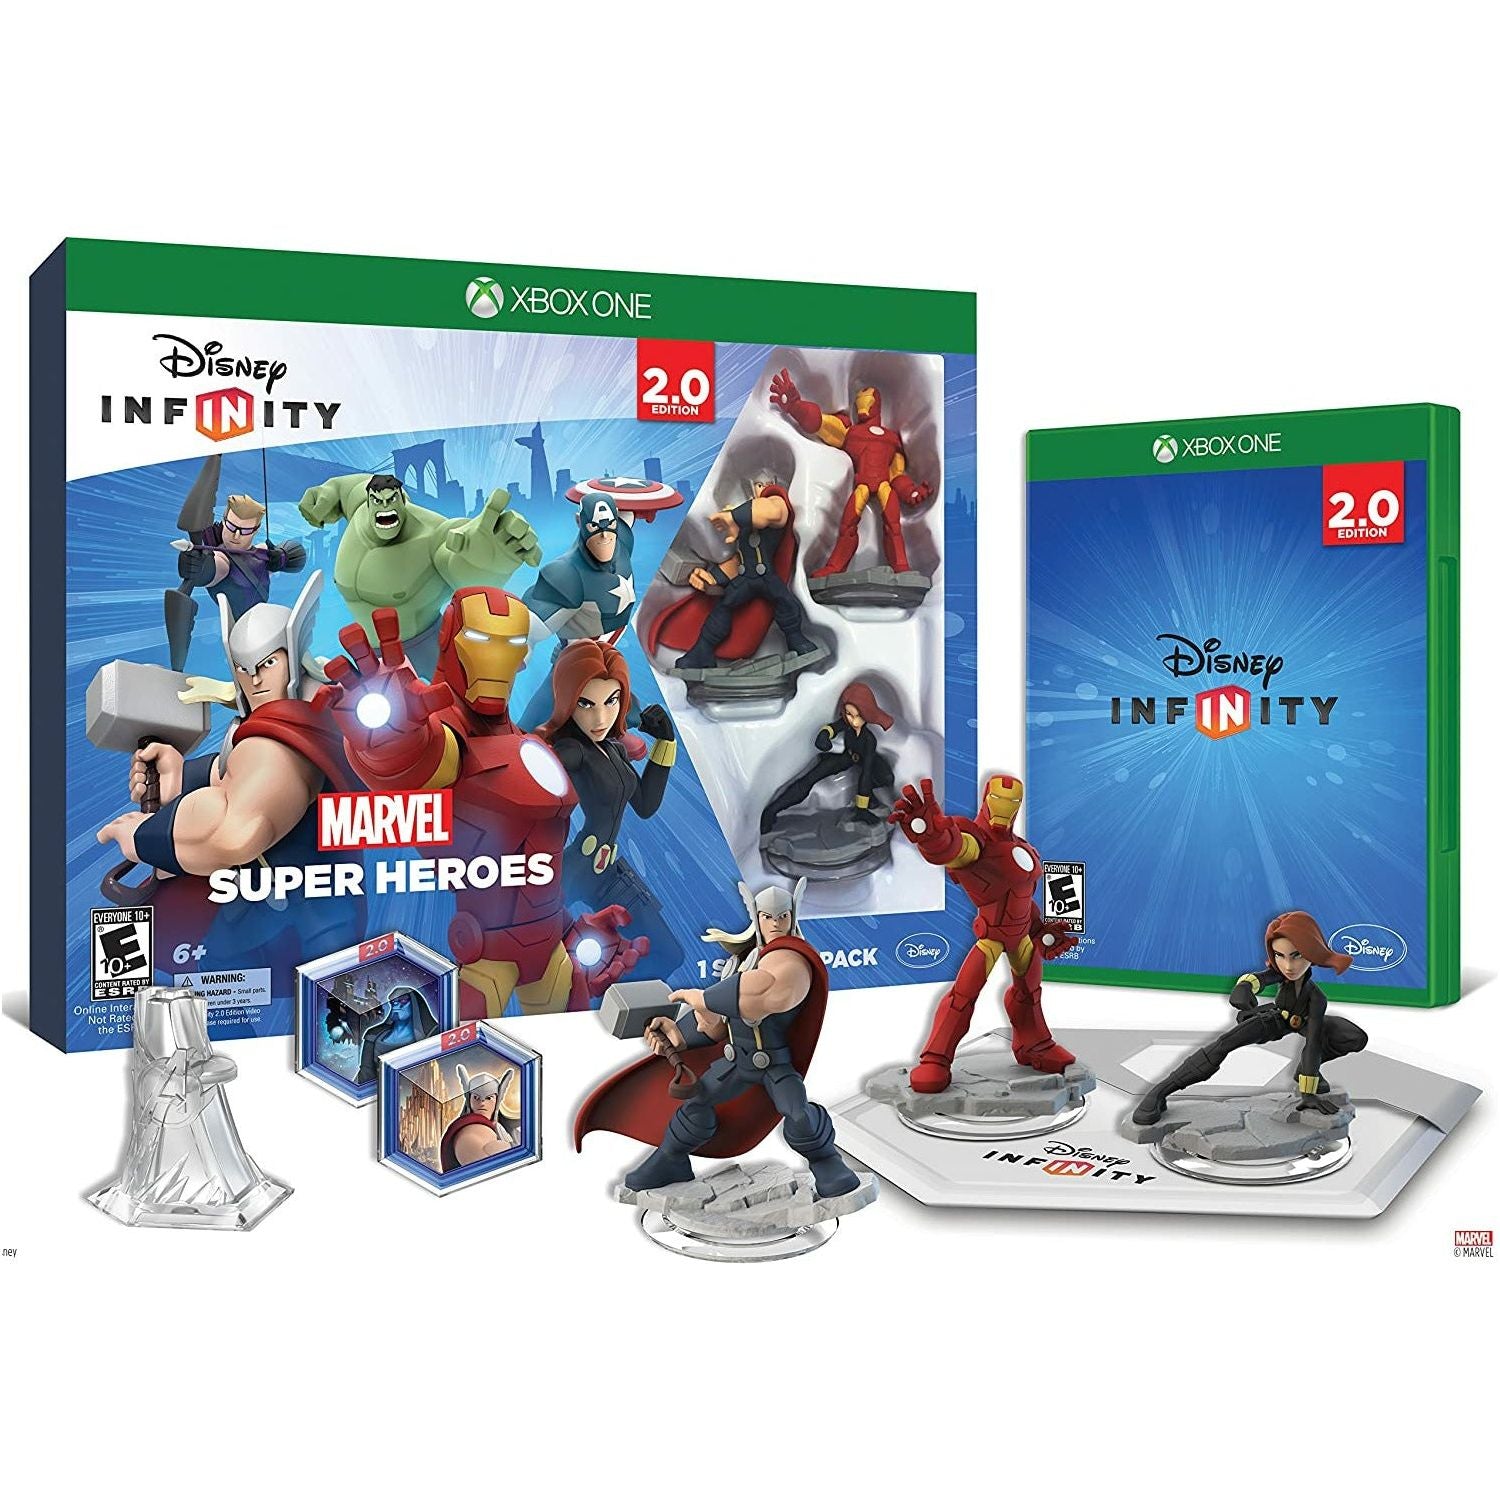 XBOX ONE - Disney Infinity 2.0 Marvel Super Heroes Starter Pack (Sealed)